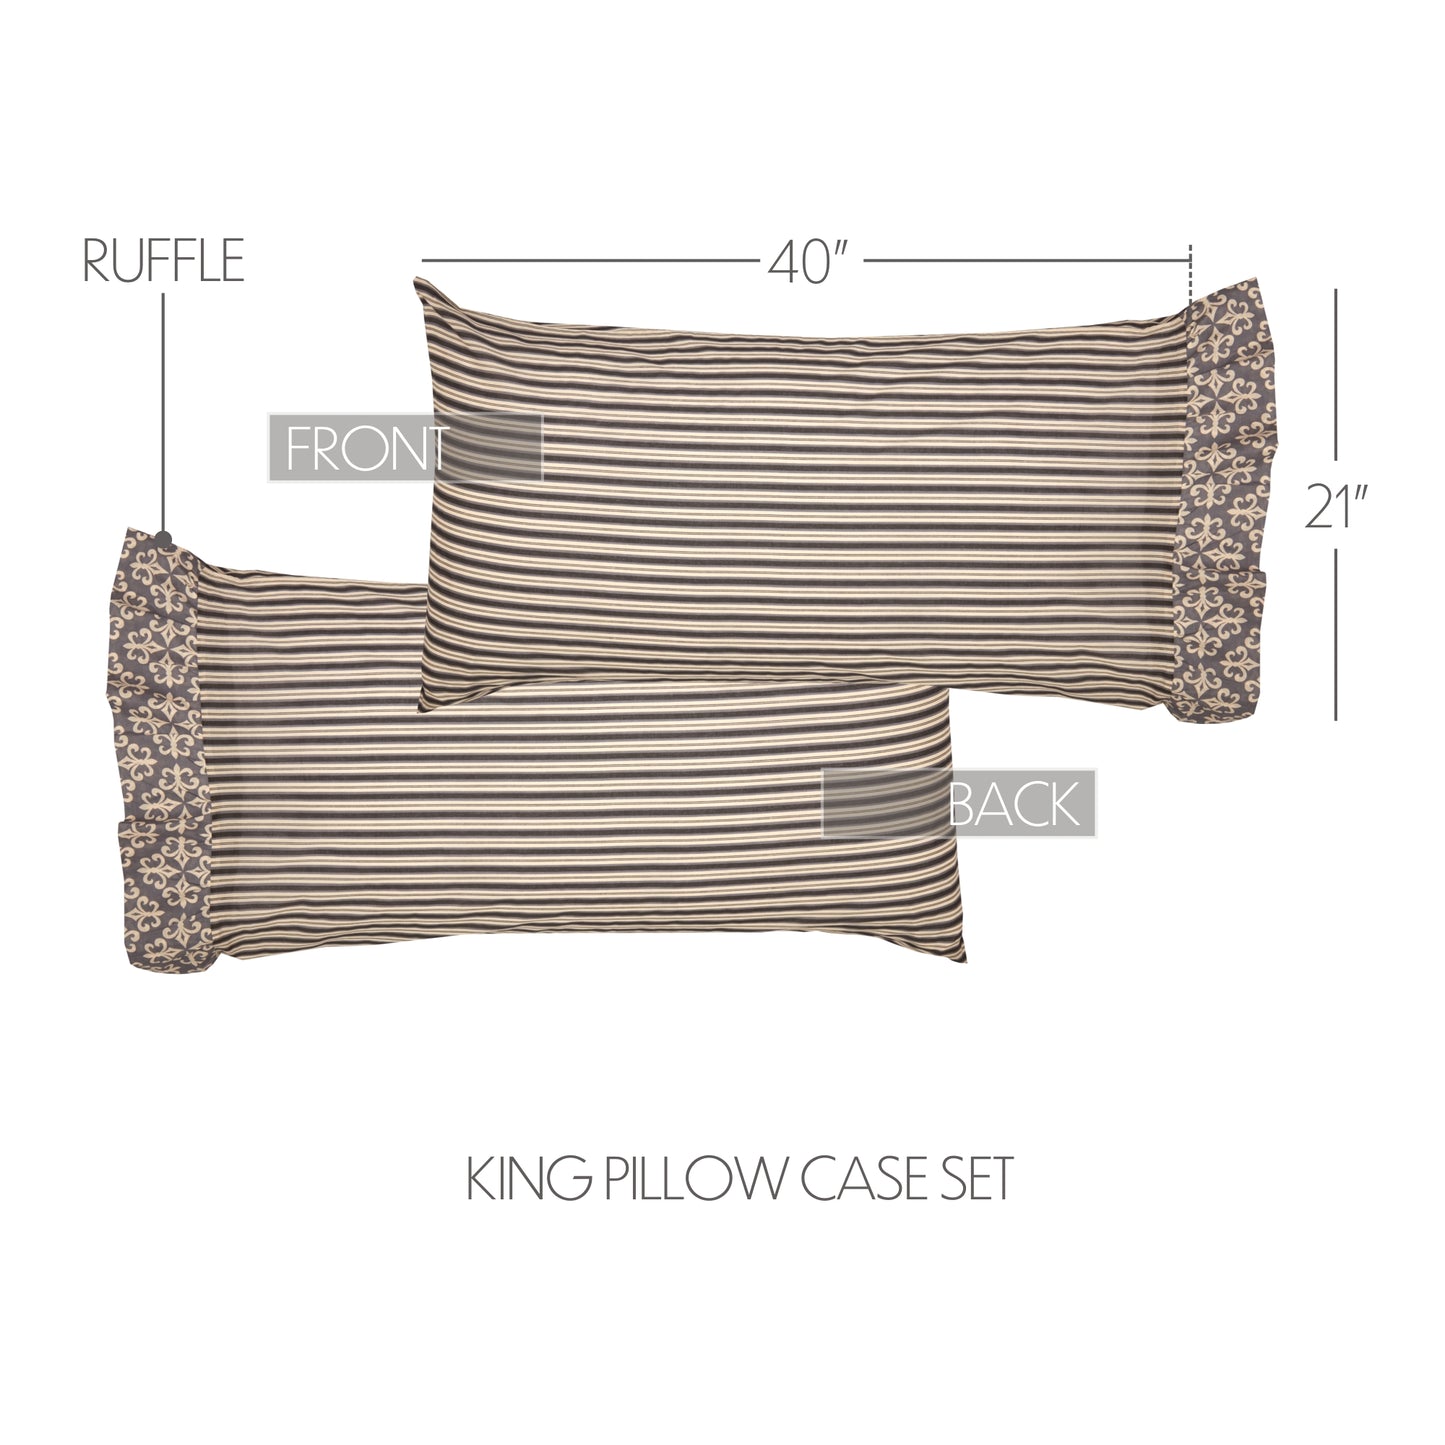 56672-Elysee-King-Pillow-Case-Set-of-2-21x40-image